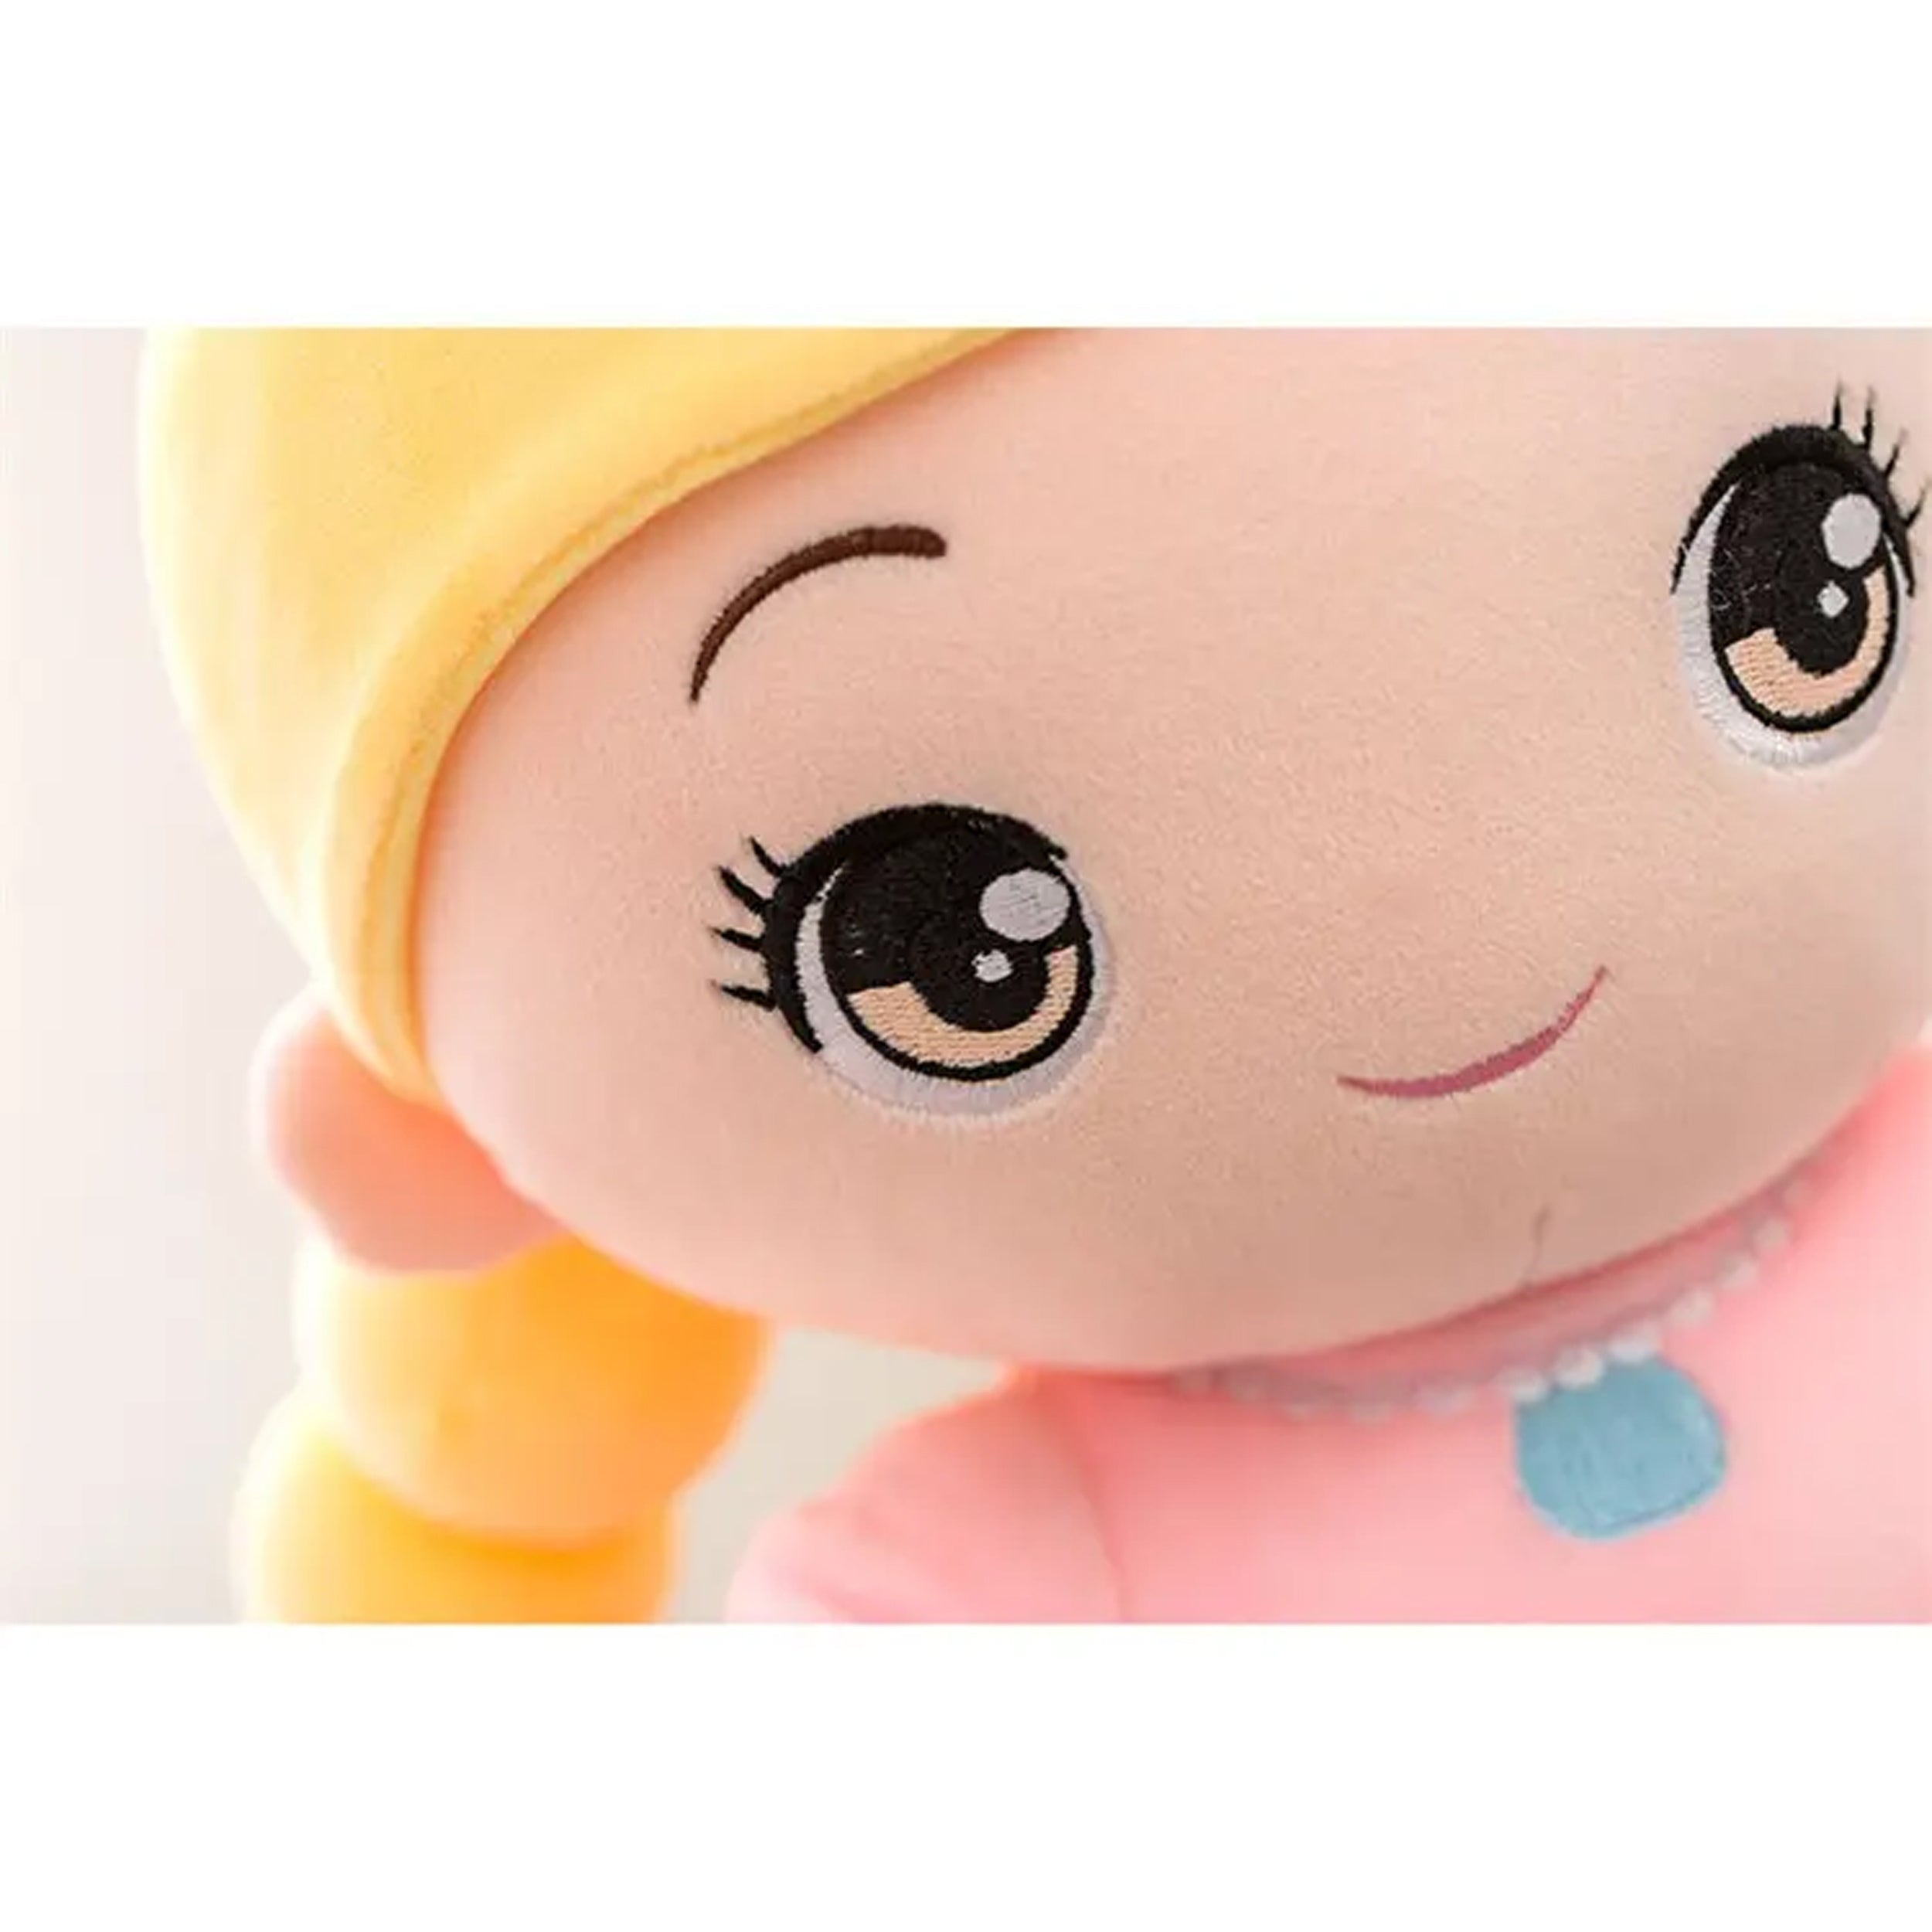 Adorable Stuffed Plush Toy